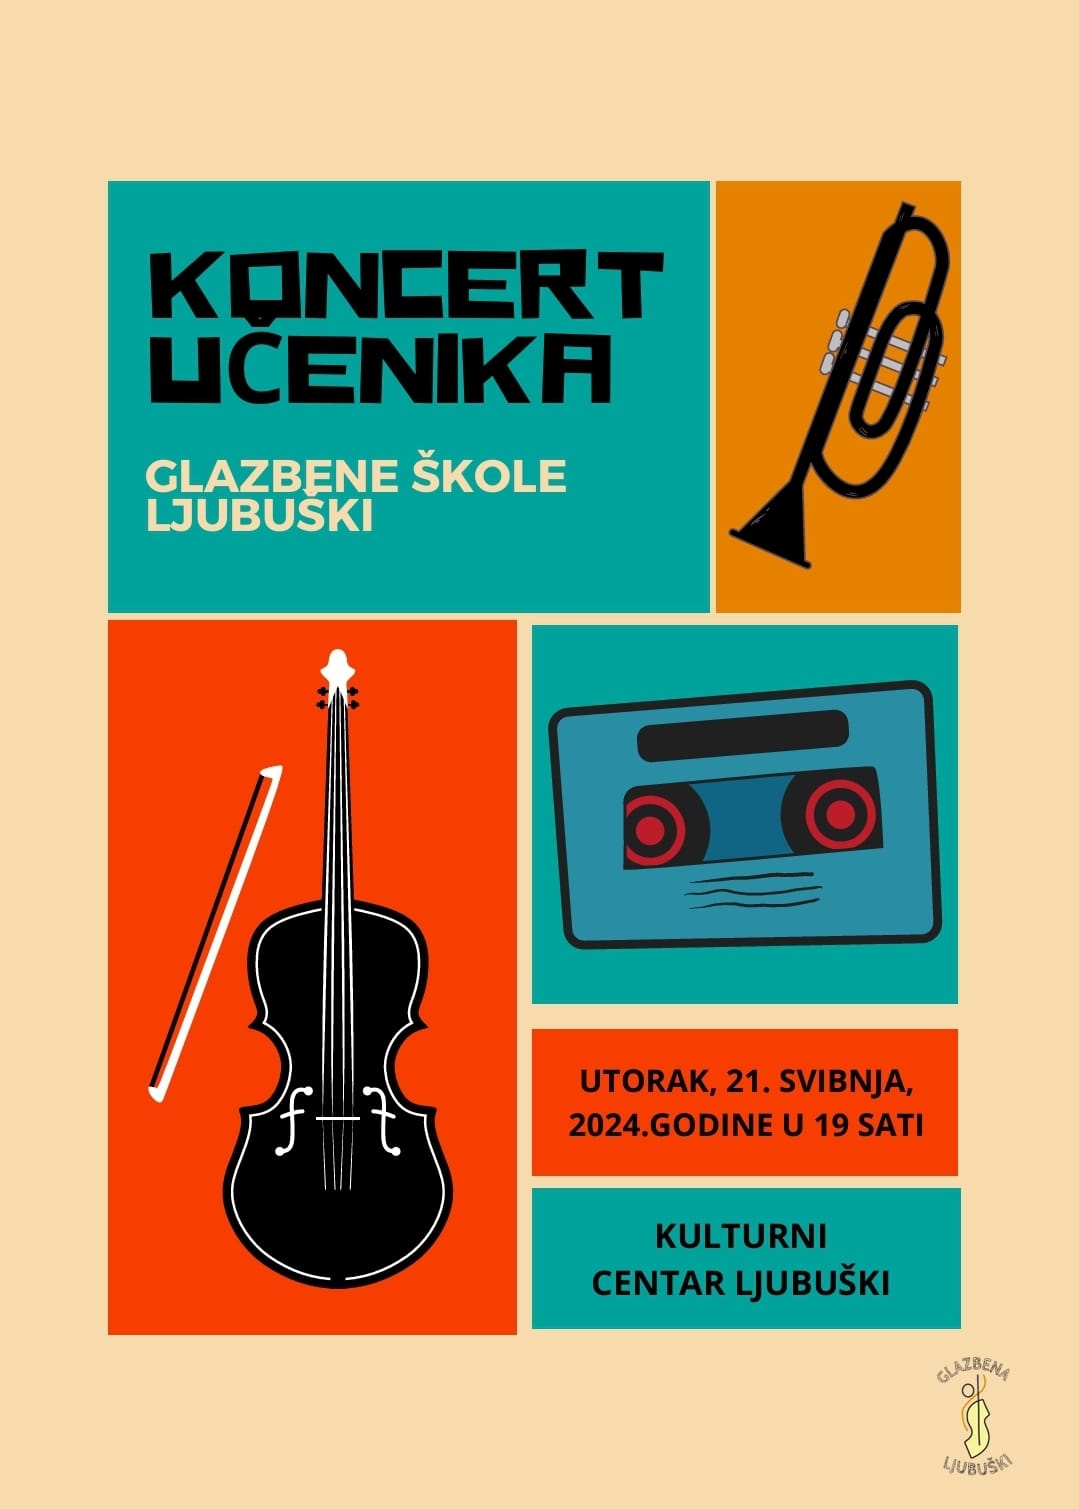 Večeras završni koncert učenika Glazbene škole Ljubuški